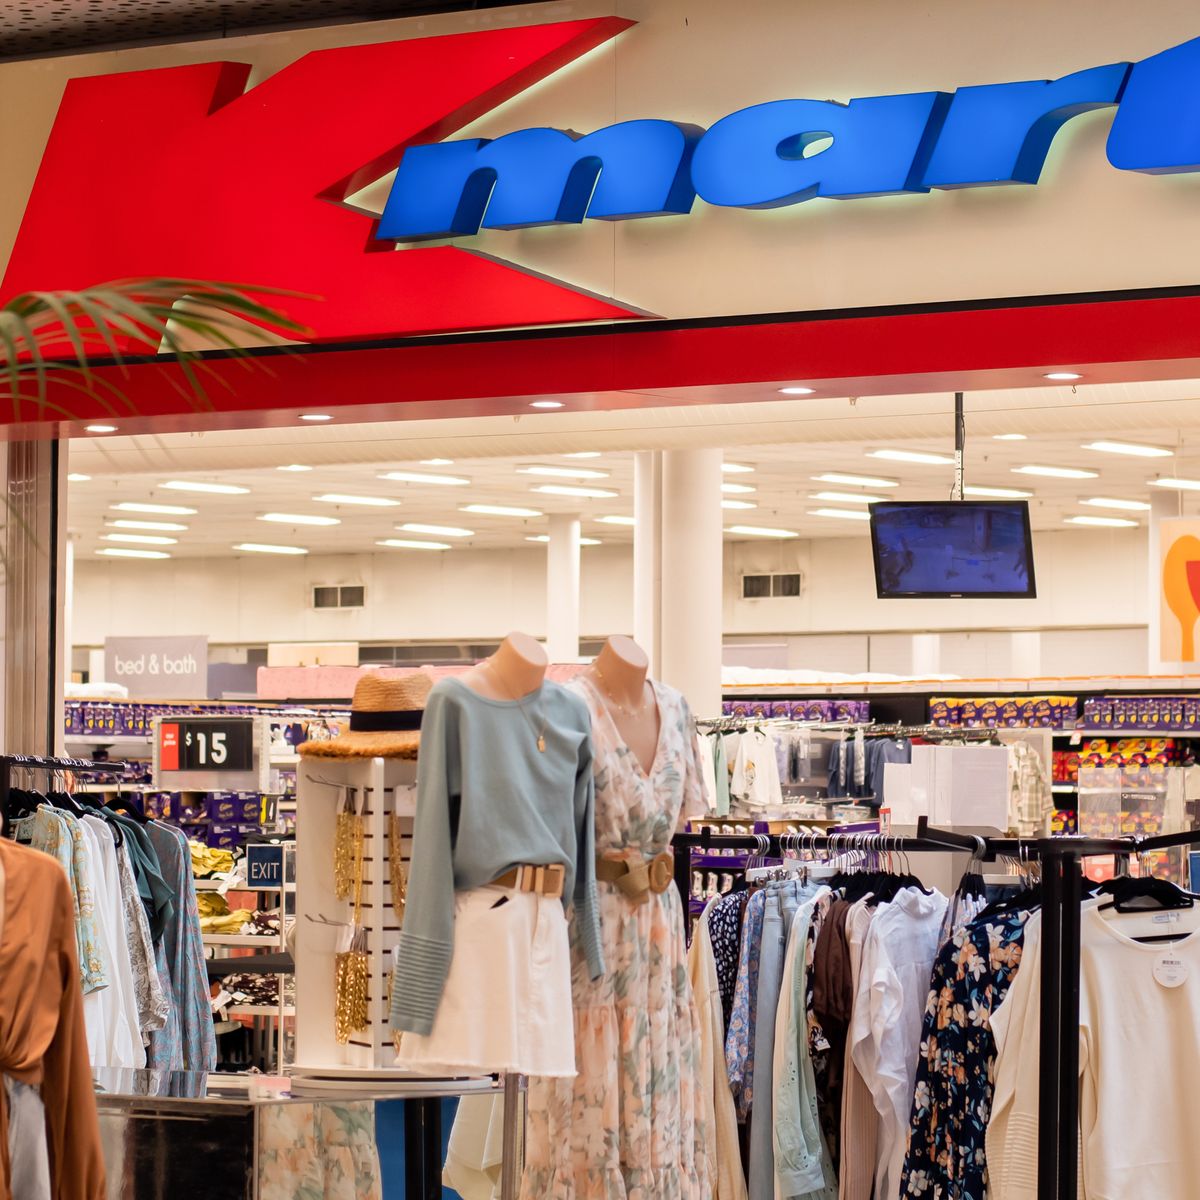 Kmart Target merger: Shake-up to create $10 billion discount retail giant